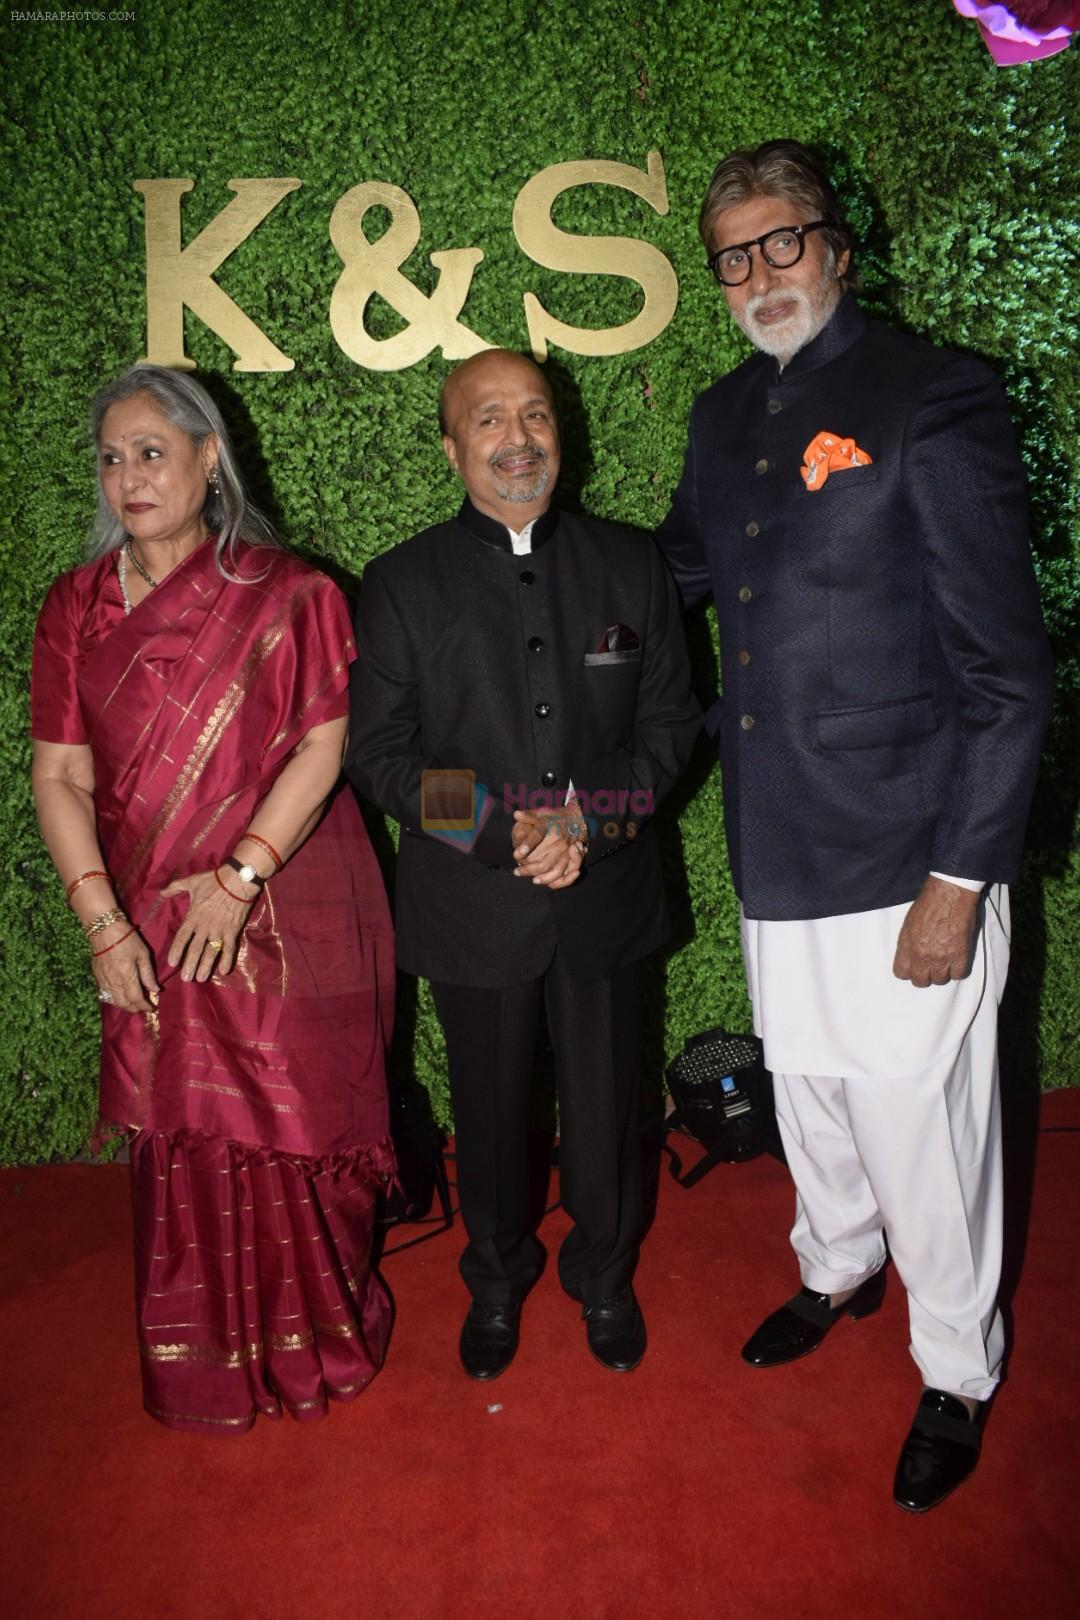 Amitabh Bachchan, Jaya Bachchan at Sameer Ajaan's daughter's wedding reception at Sun n Sand in juhu on 22nd Jan 2019